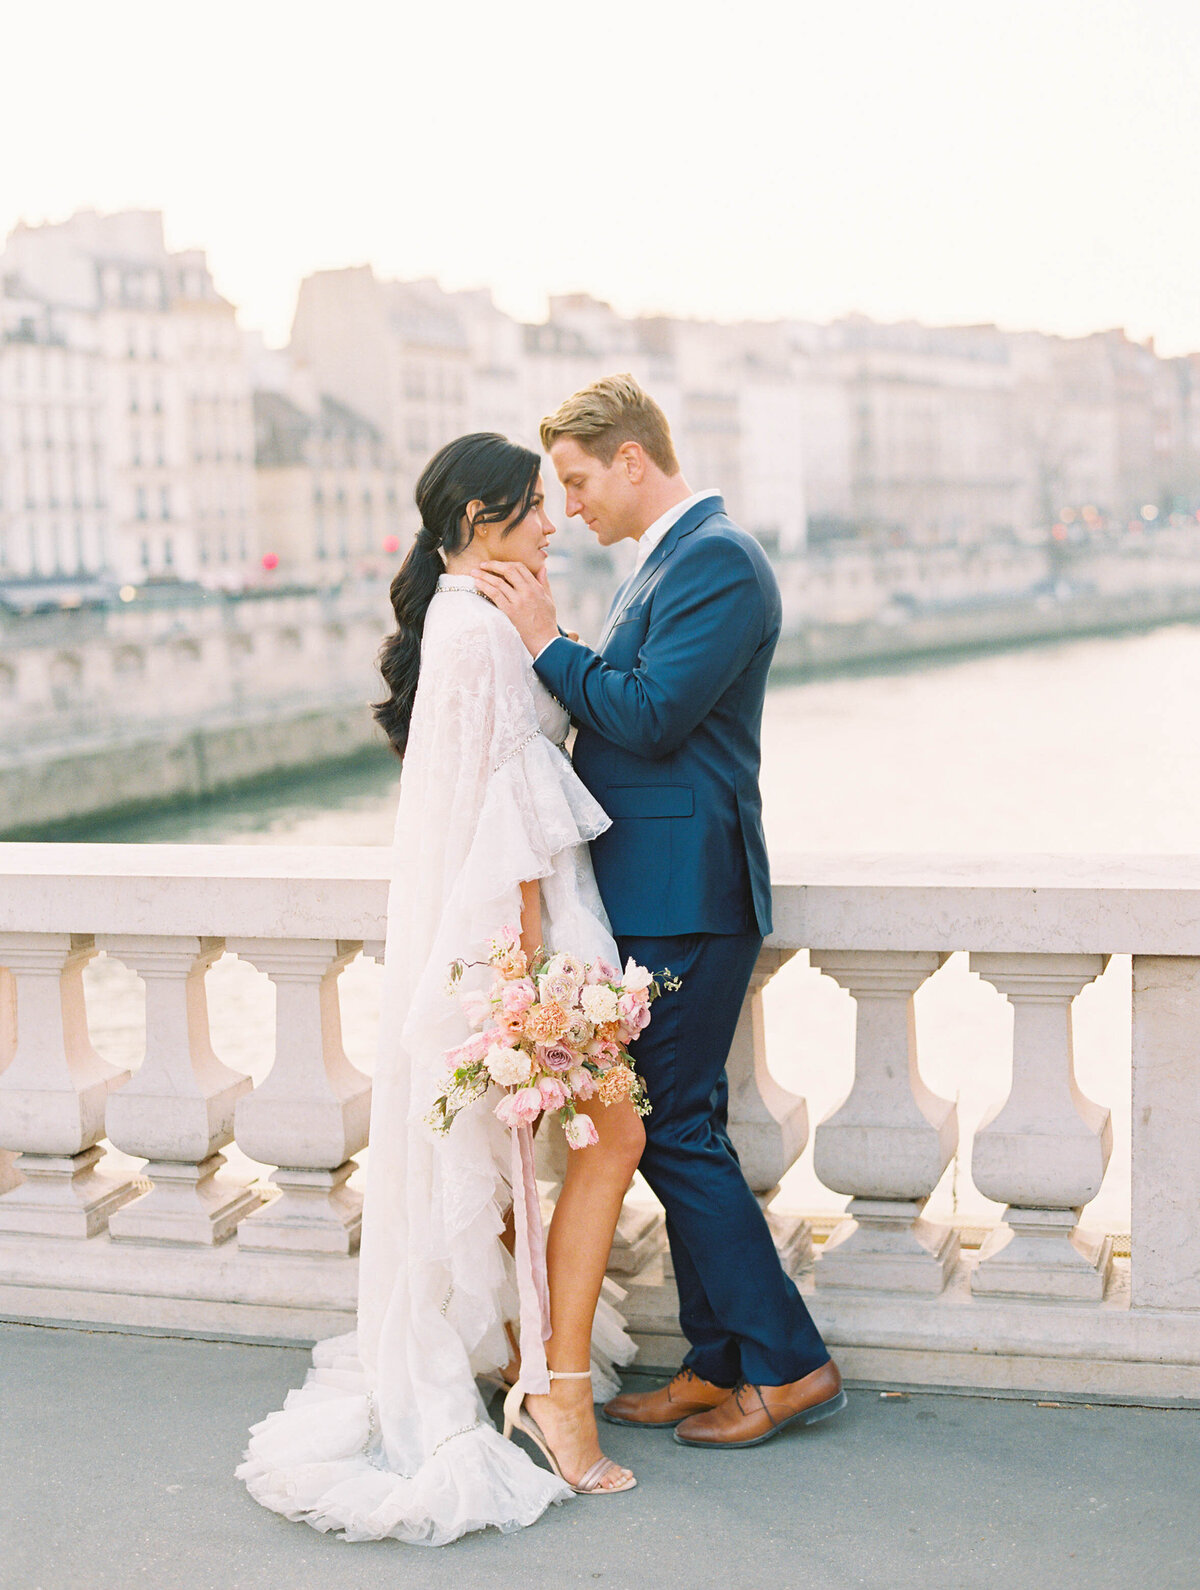 Bride and groom at the Seine in Paris, France for Paris destination wedding